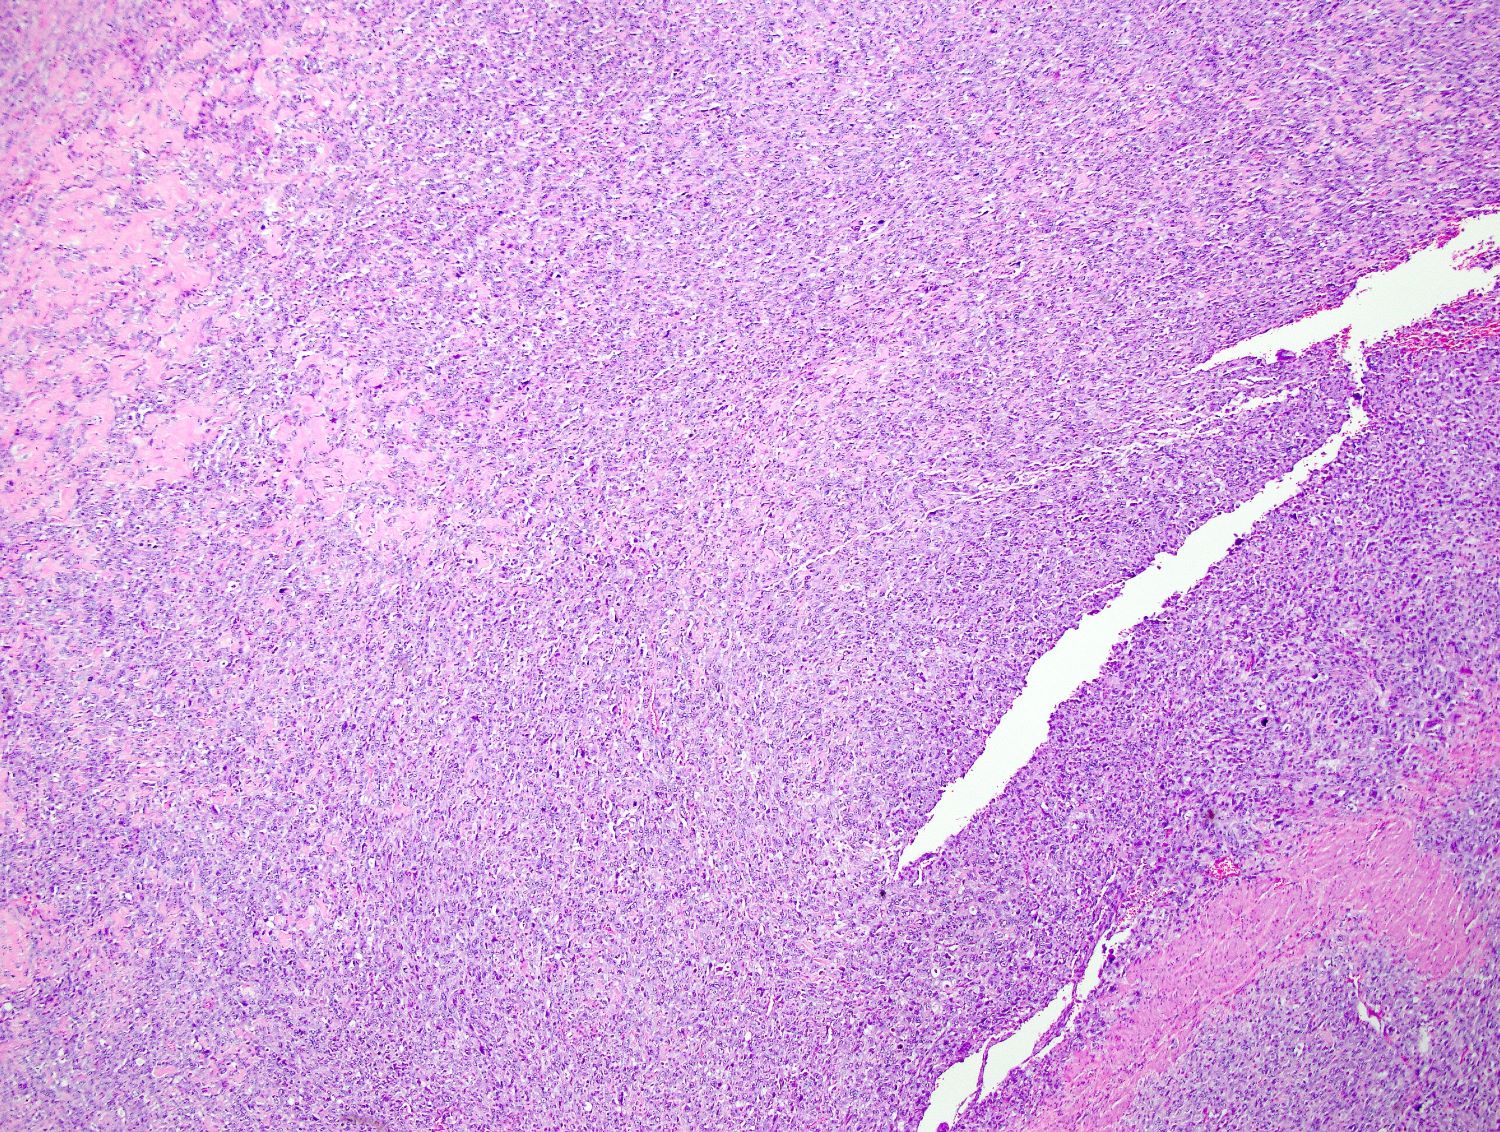 Epithelioid mesenchymal neoplasm